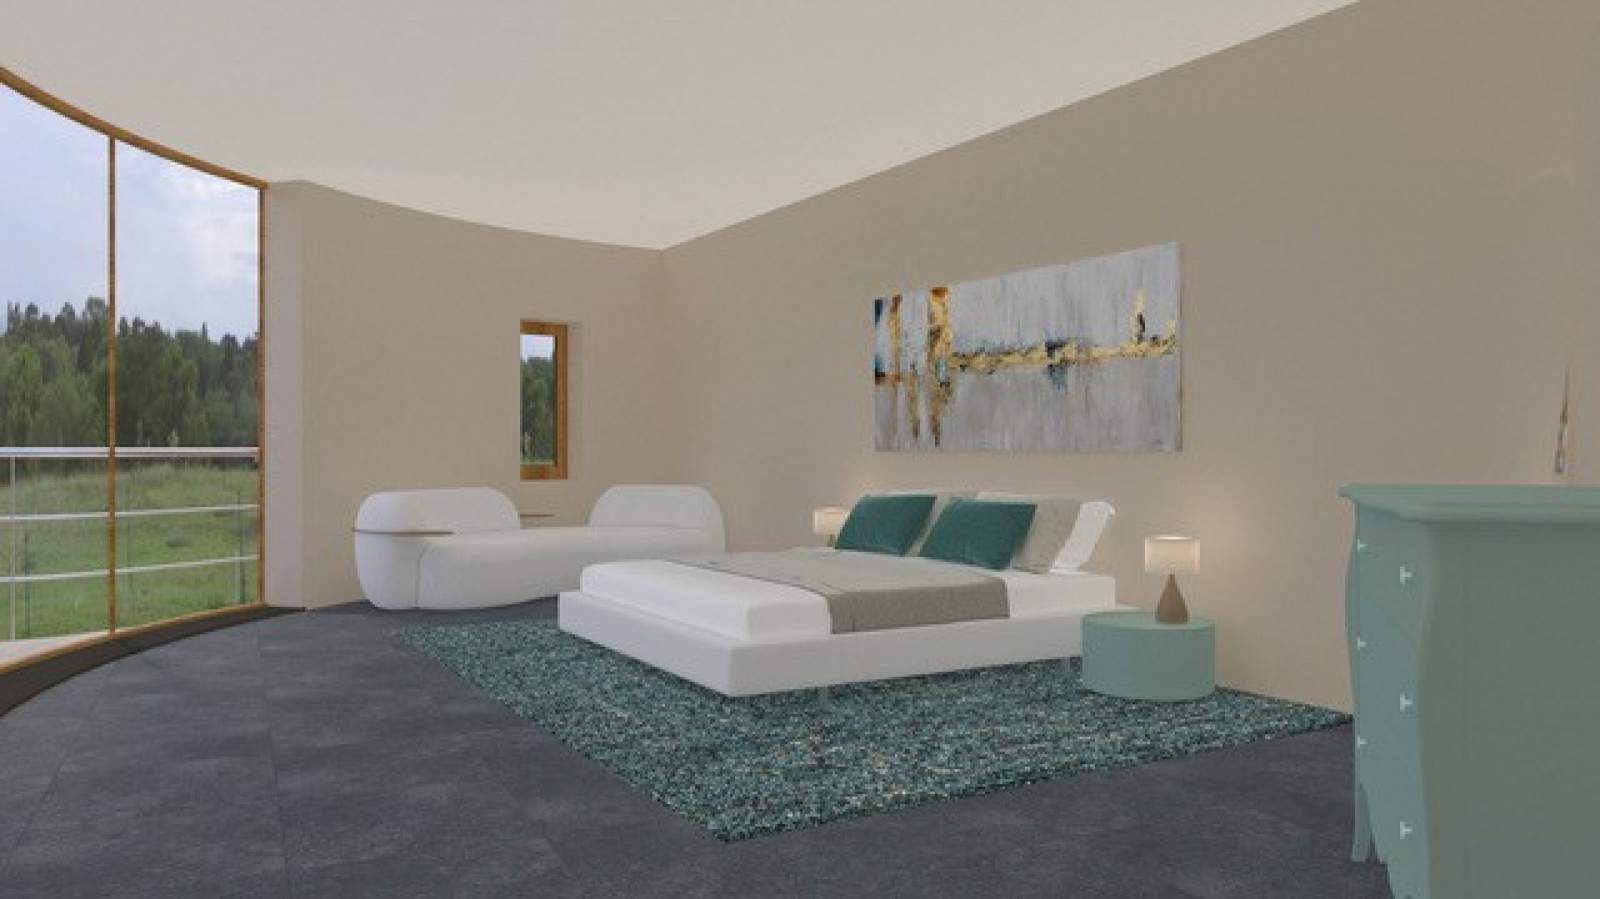 5 Bedroom Villa, in final phase of construction, for sale, in Lagos, Algarve_200305